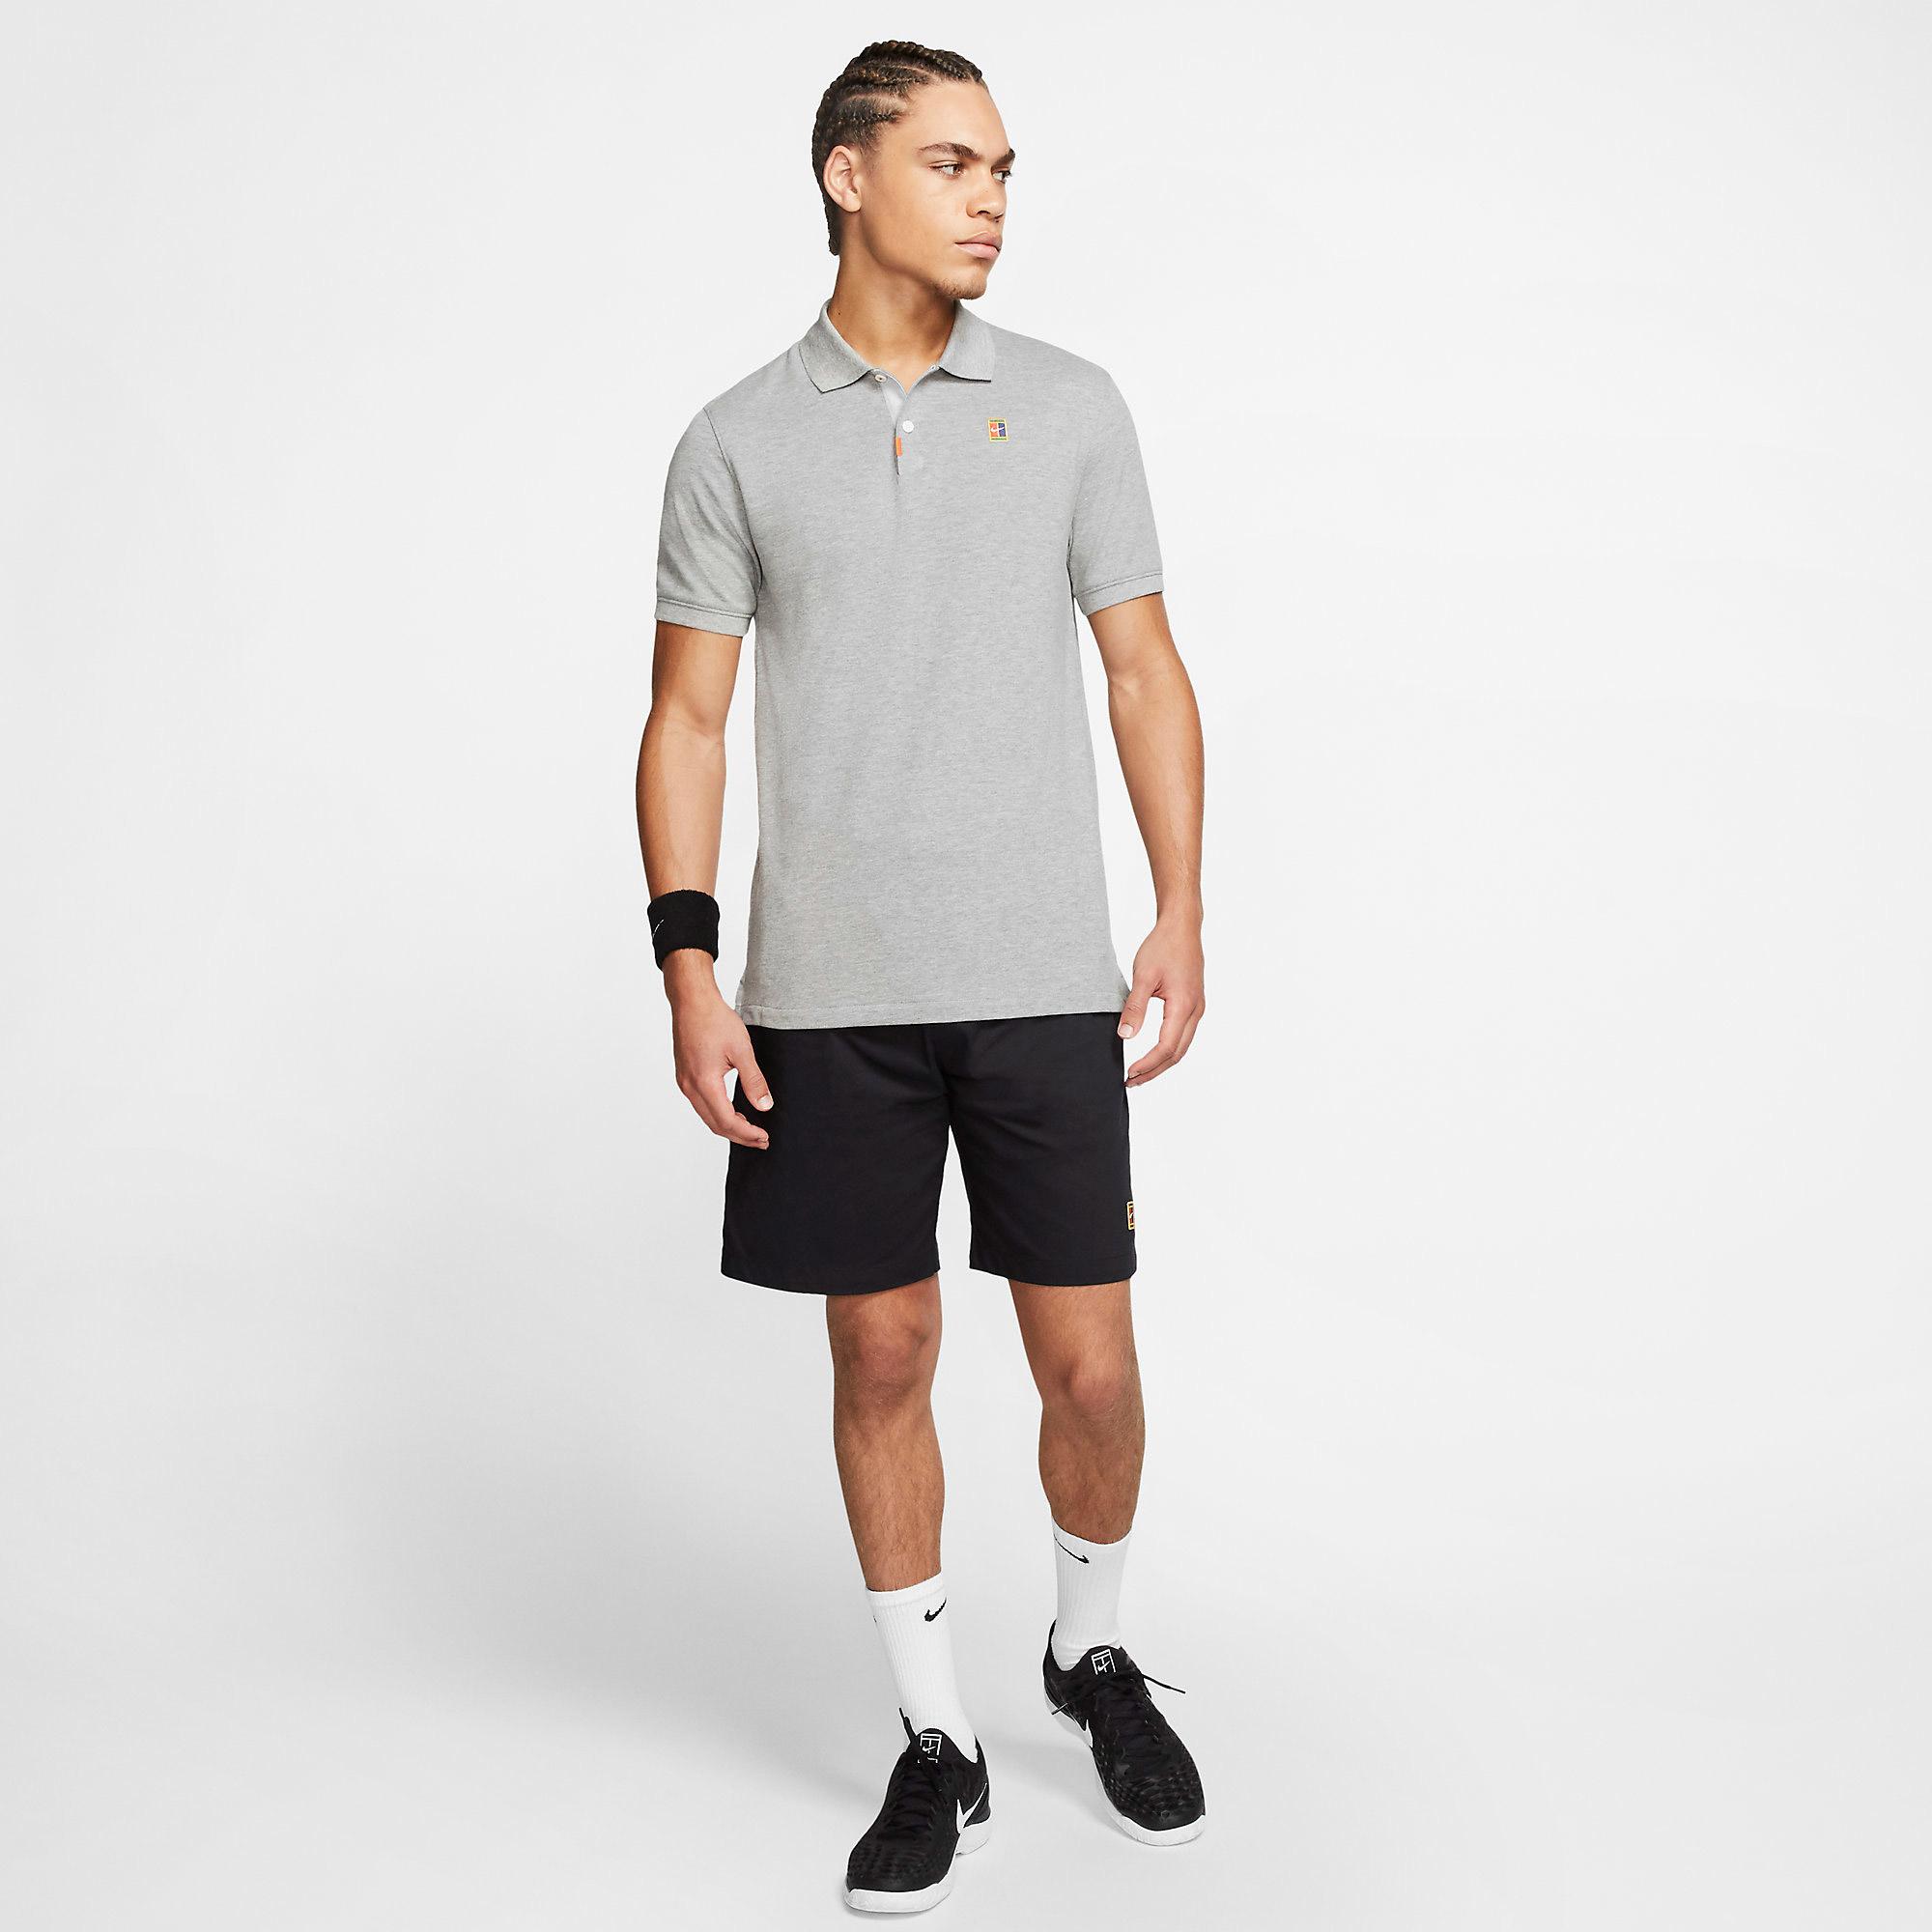 Nike Mens Slim Fit Polo - Dark Grey - Tennisnuts.com